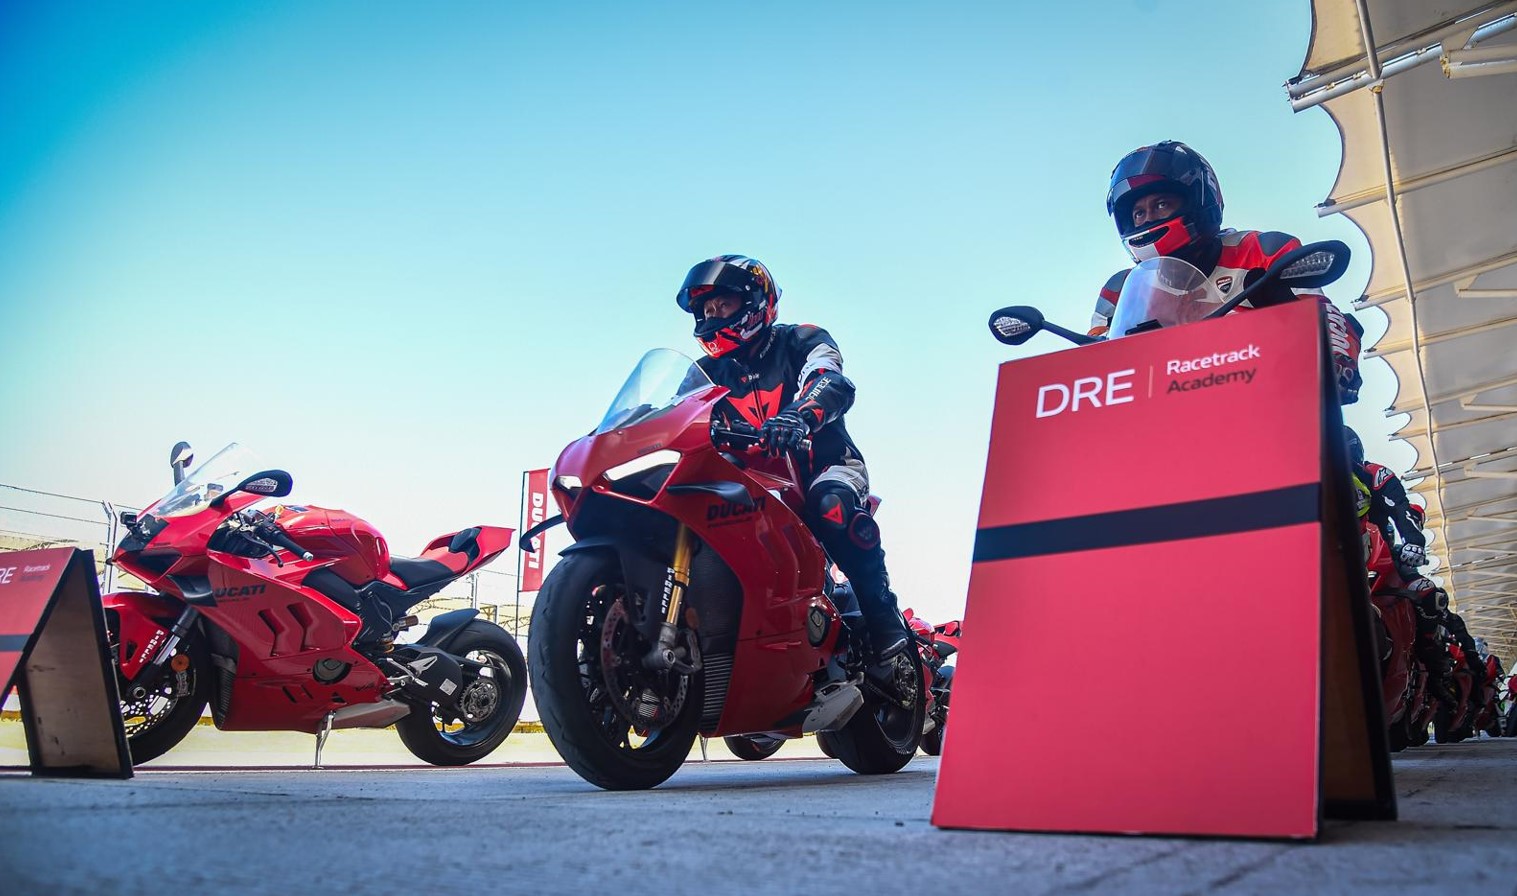 Mengenal Ducati Panigale V4 S, Superbike Buat Peserta DRE Mandalika